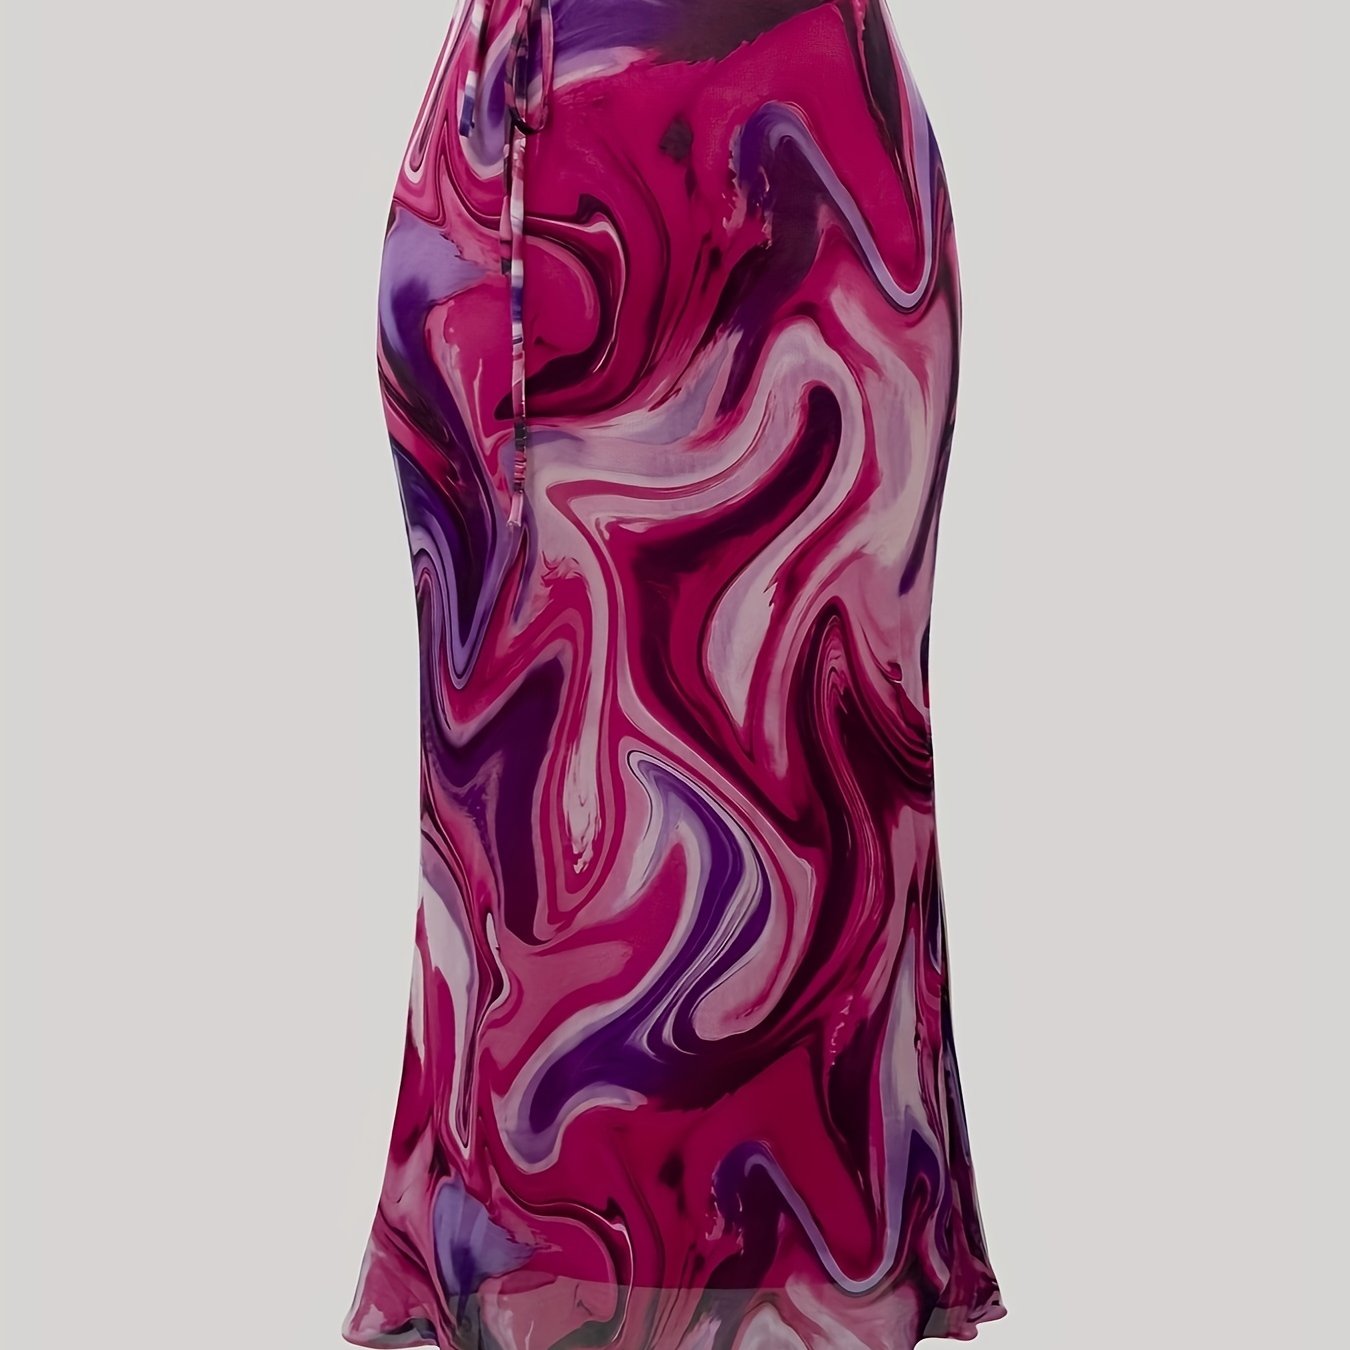 Antmvs All Over Print Tie Waist Mesh Skirt, Casual Skirt For Spring & Summer, Women's Clothing